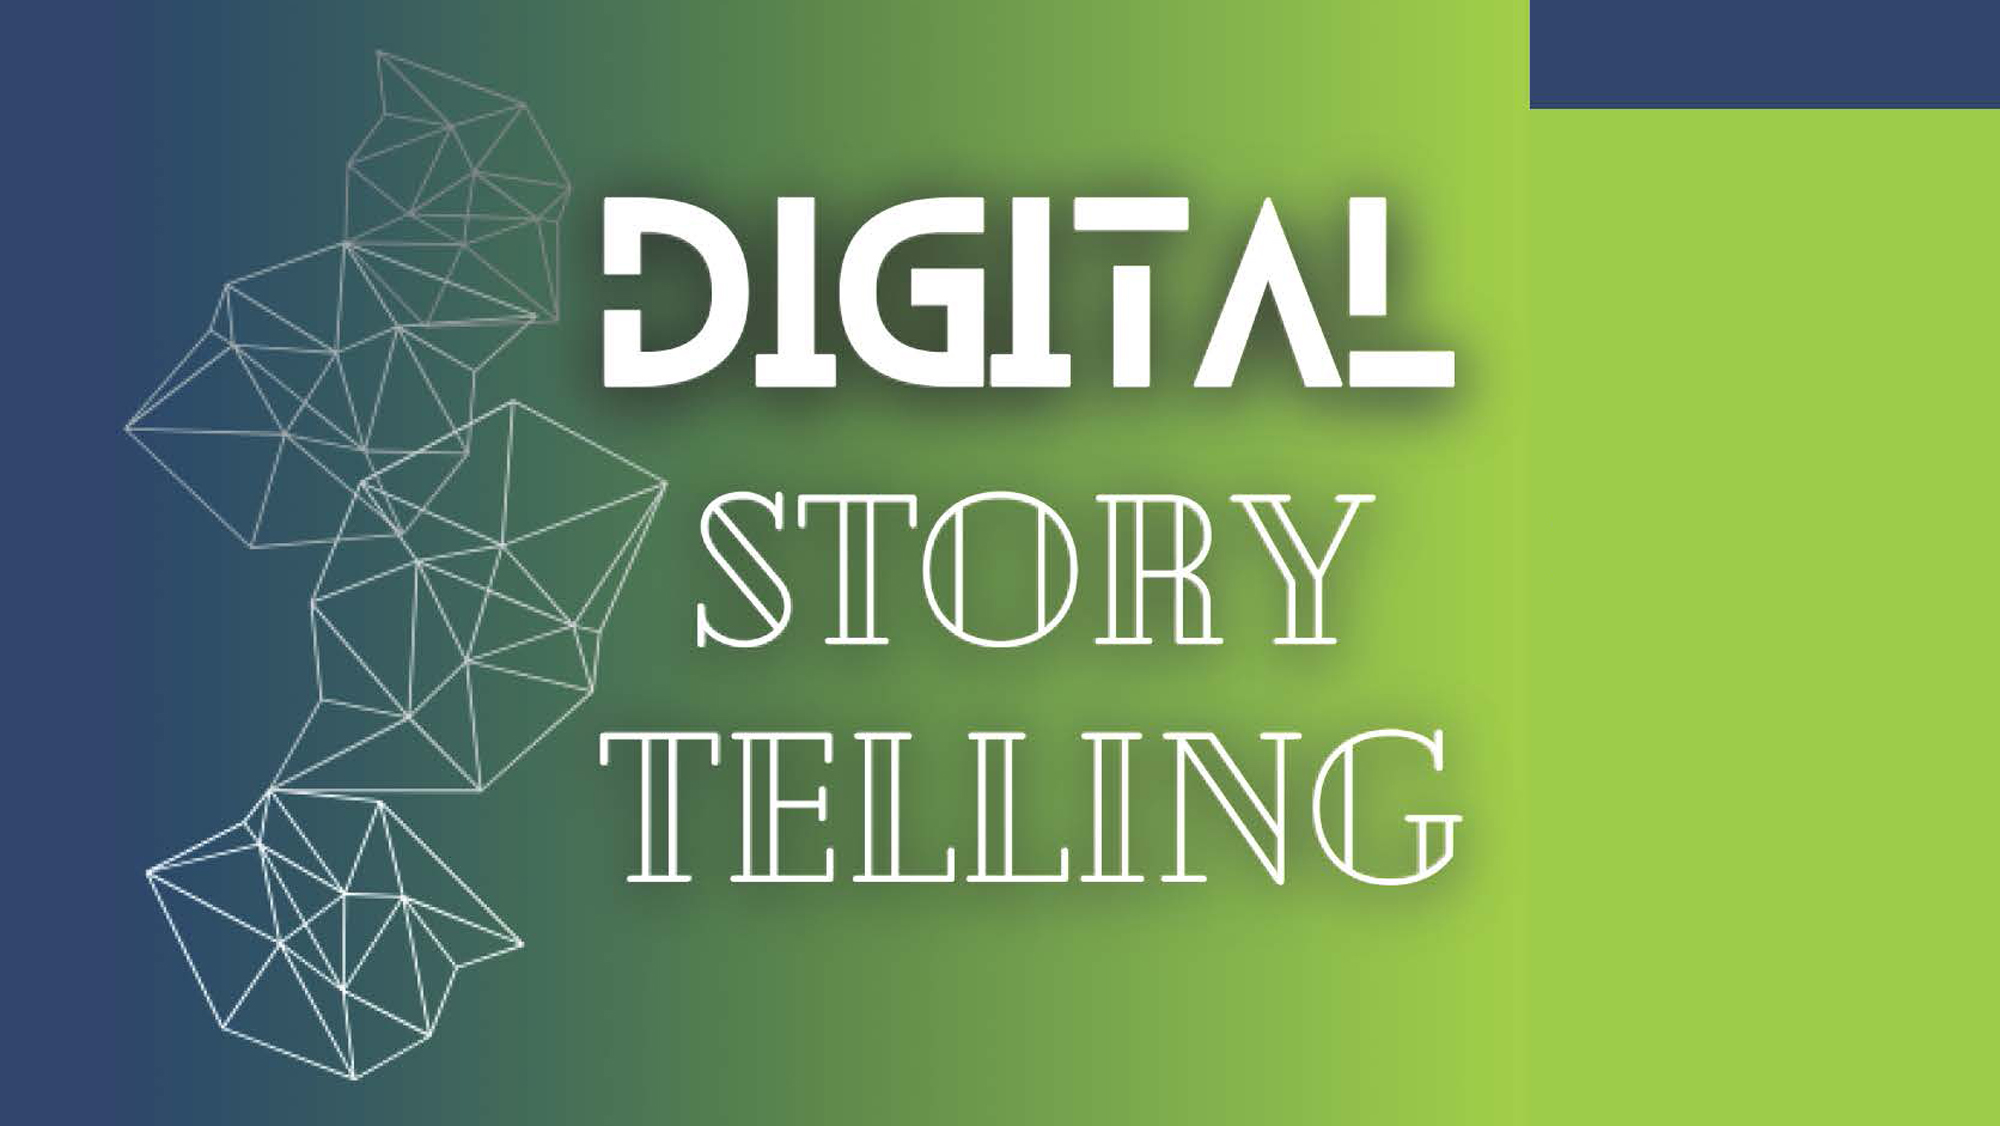 Title image of the workshop "Digital Storytelling II" on green to blue gradient